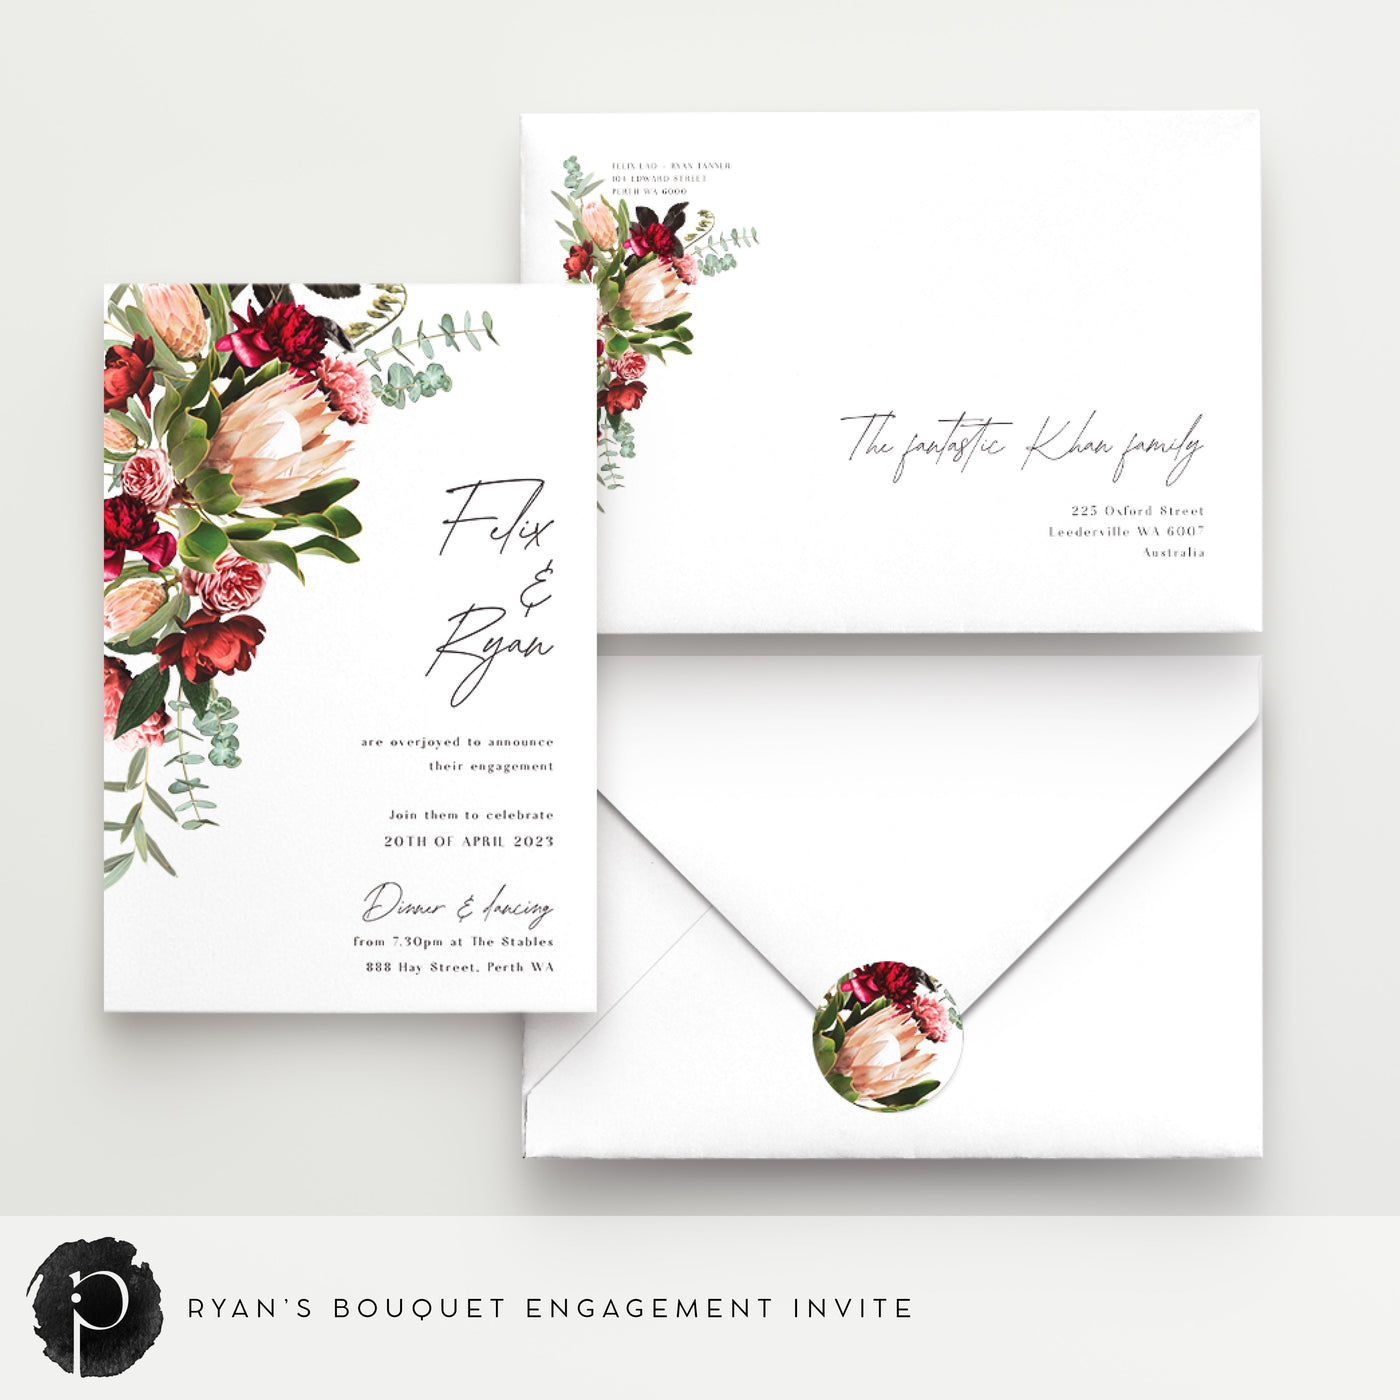 Ryan's Bouquet - Engagement Invitations